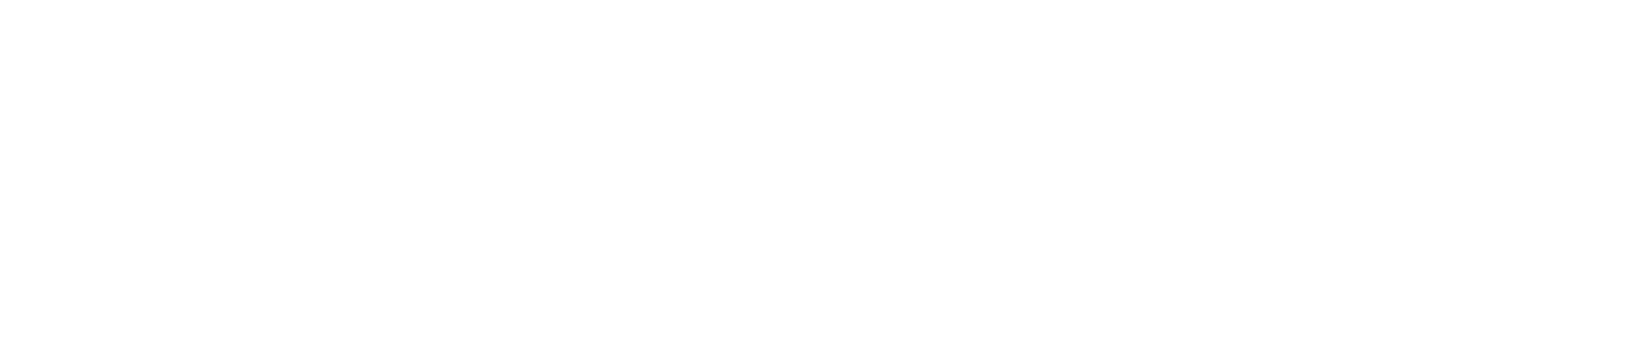 Eromancer Logo